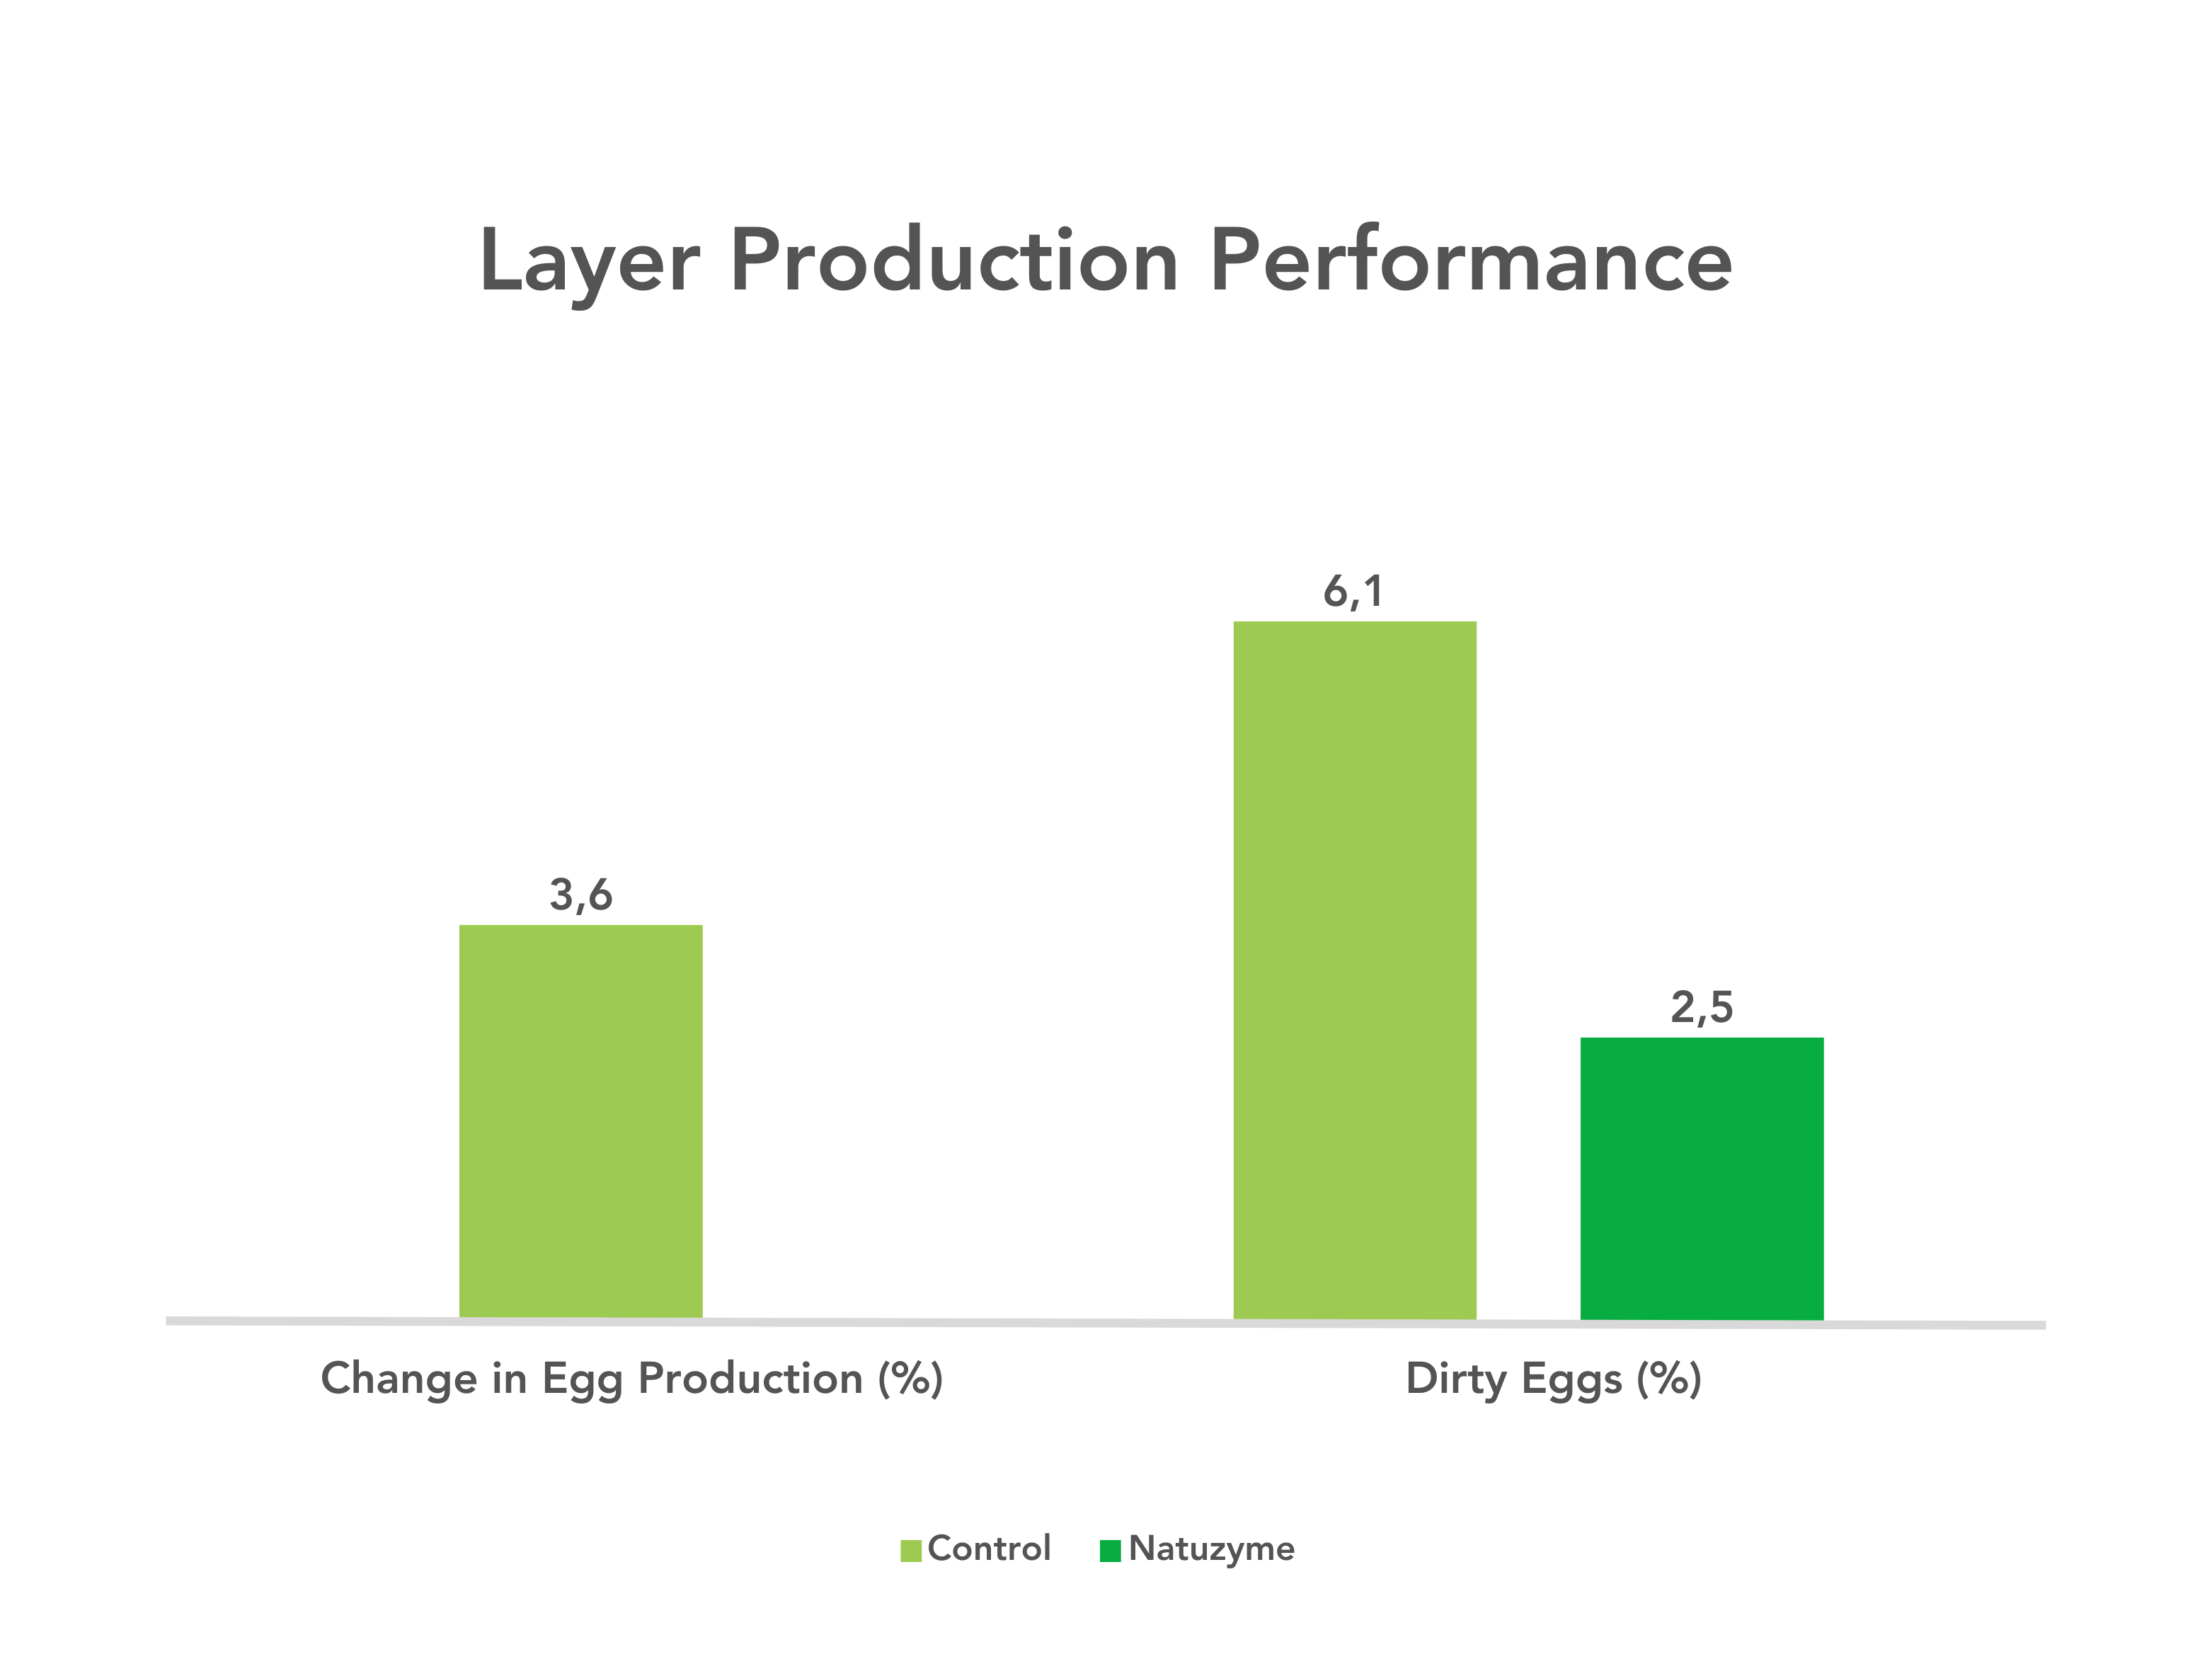 Natuzyme-Layer Production Performance